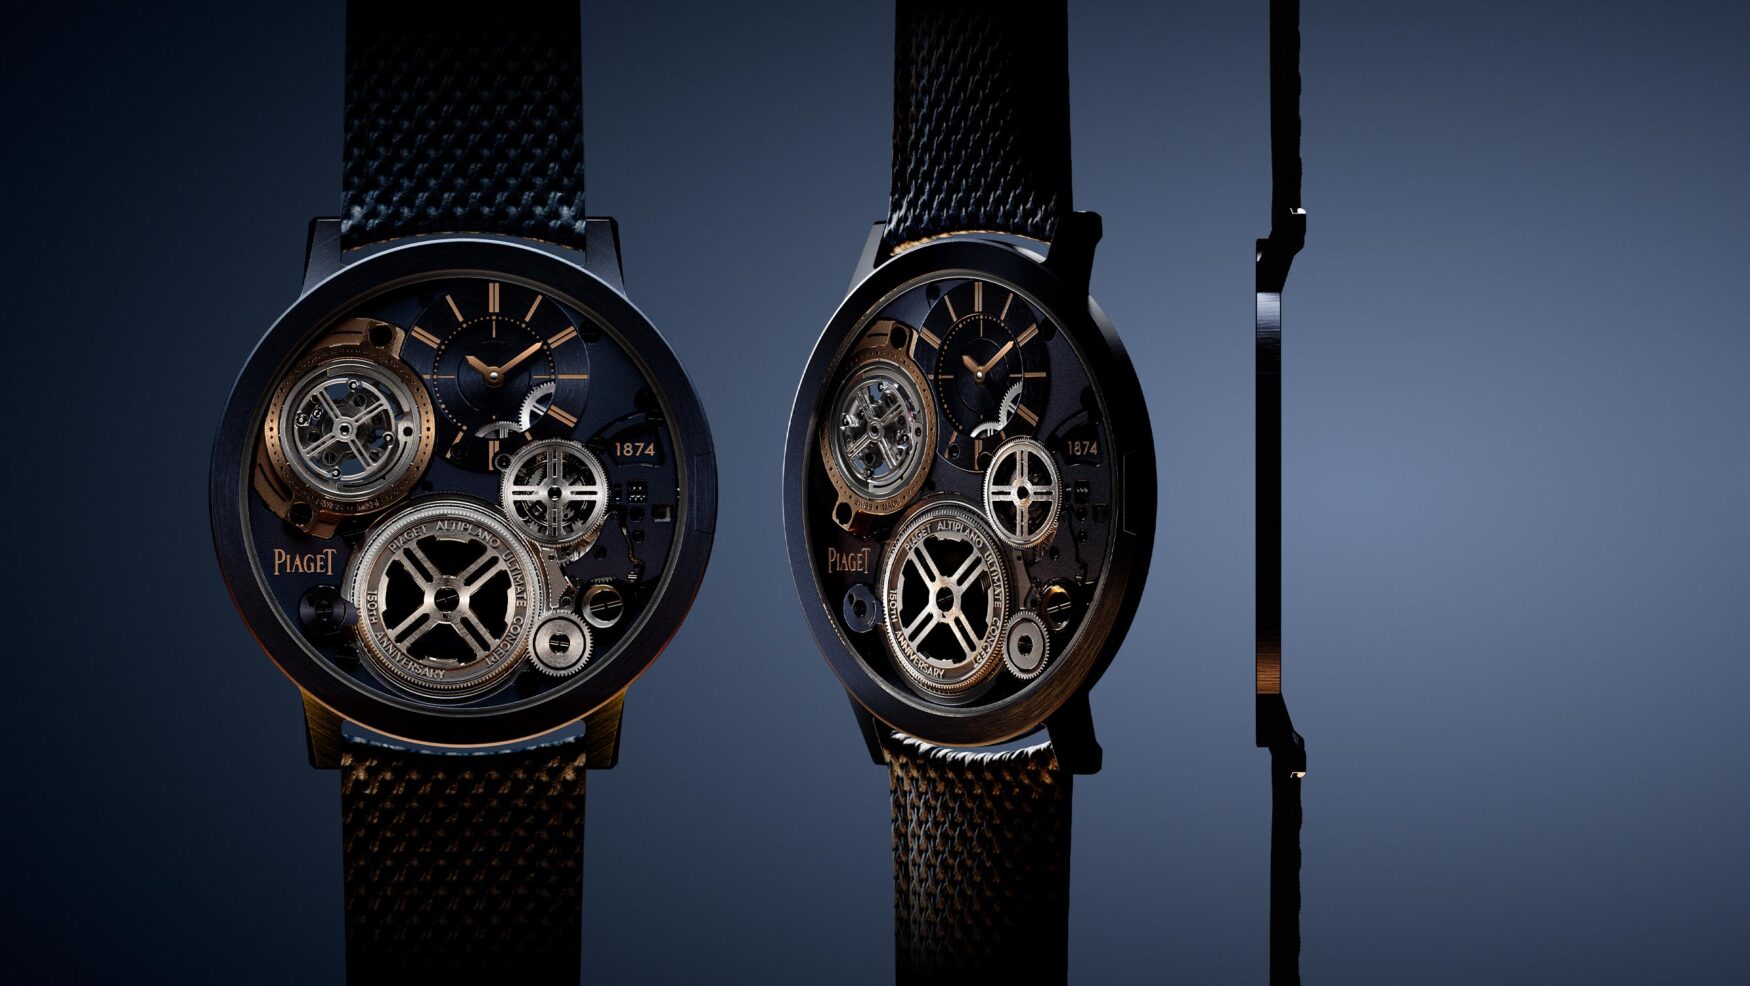 The Piaget Altiplano Ultimate Concept Tourbillon is the world’s thinnest tourbillon watch